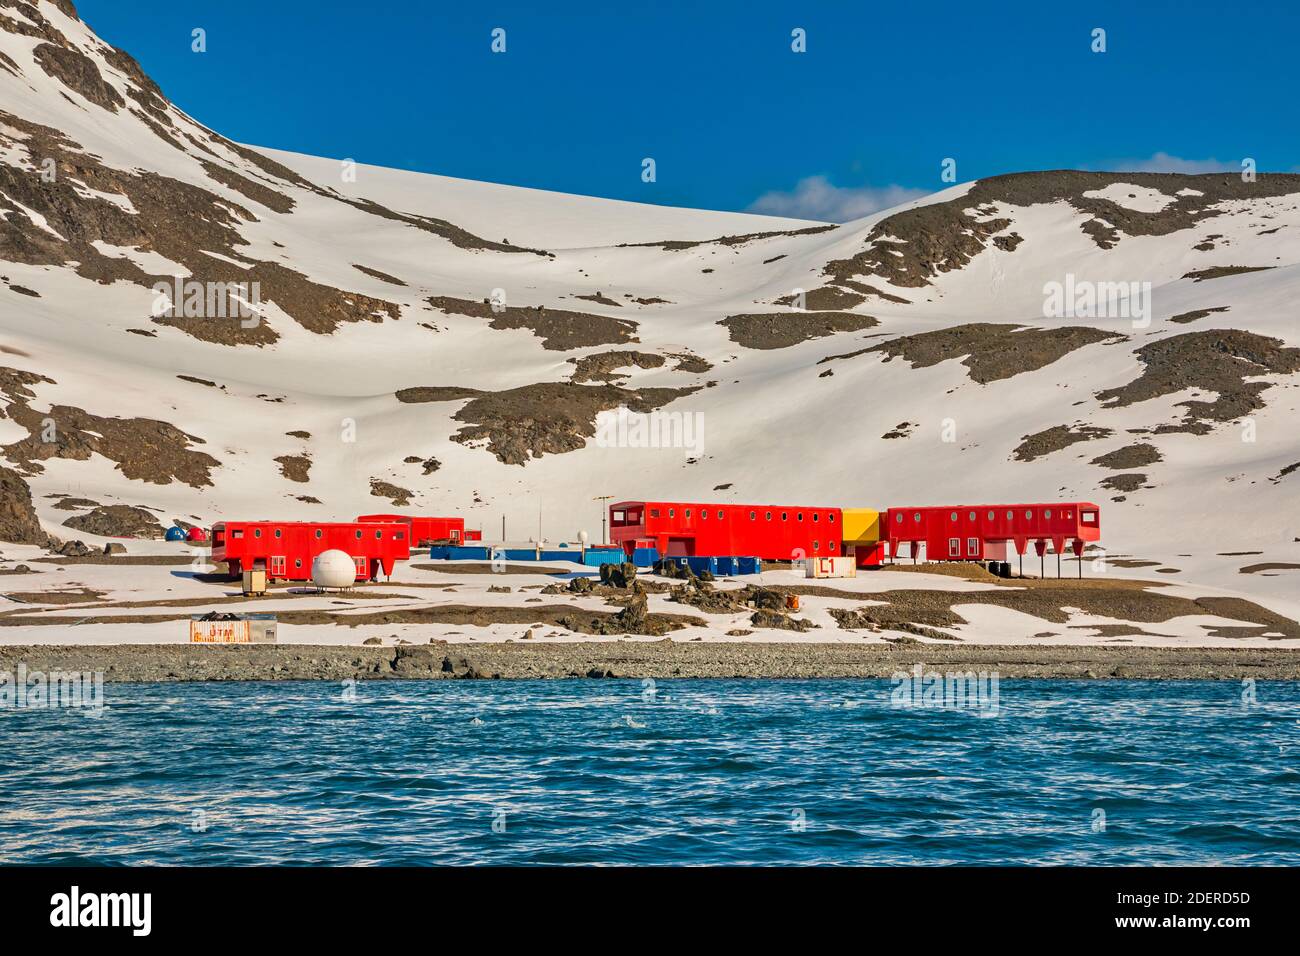 The Spanish Juan Carlos I Antarctic scientific base, on the South Shetland Islands, Antarctica Stock Photo